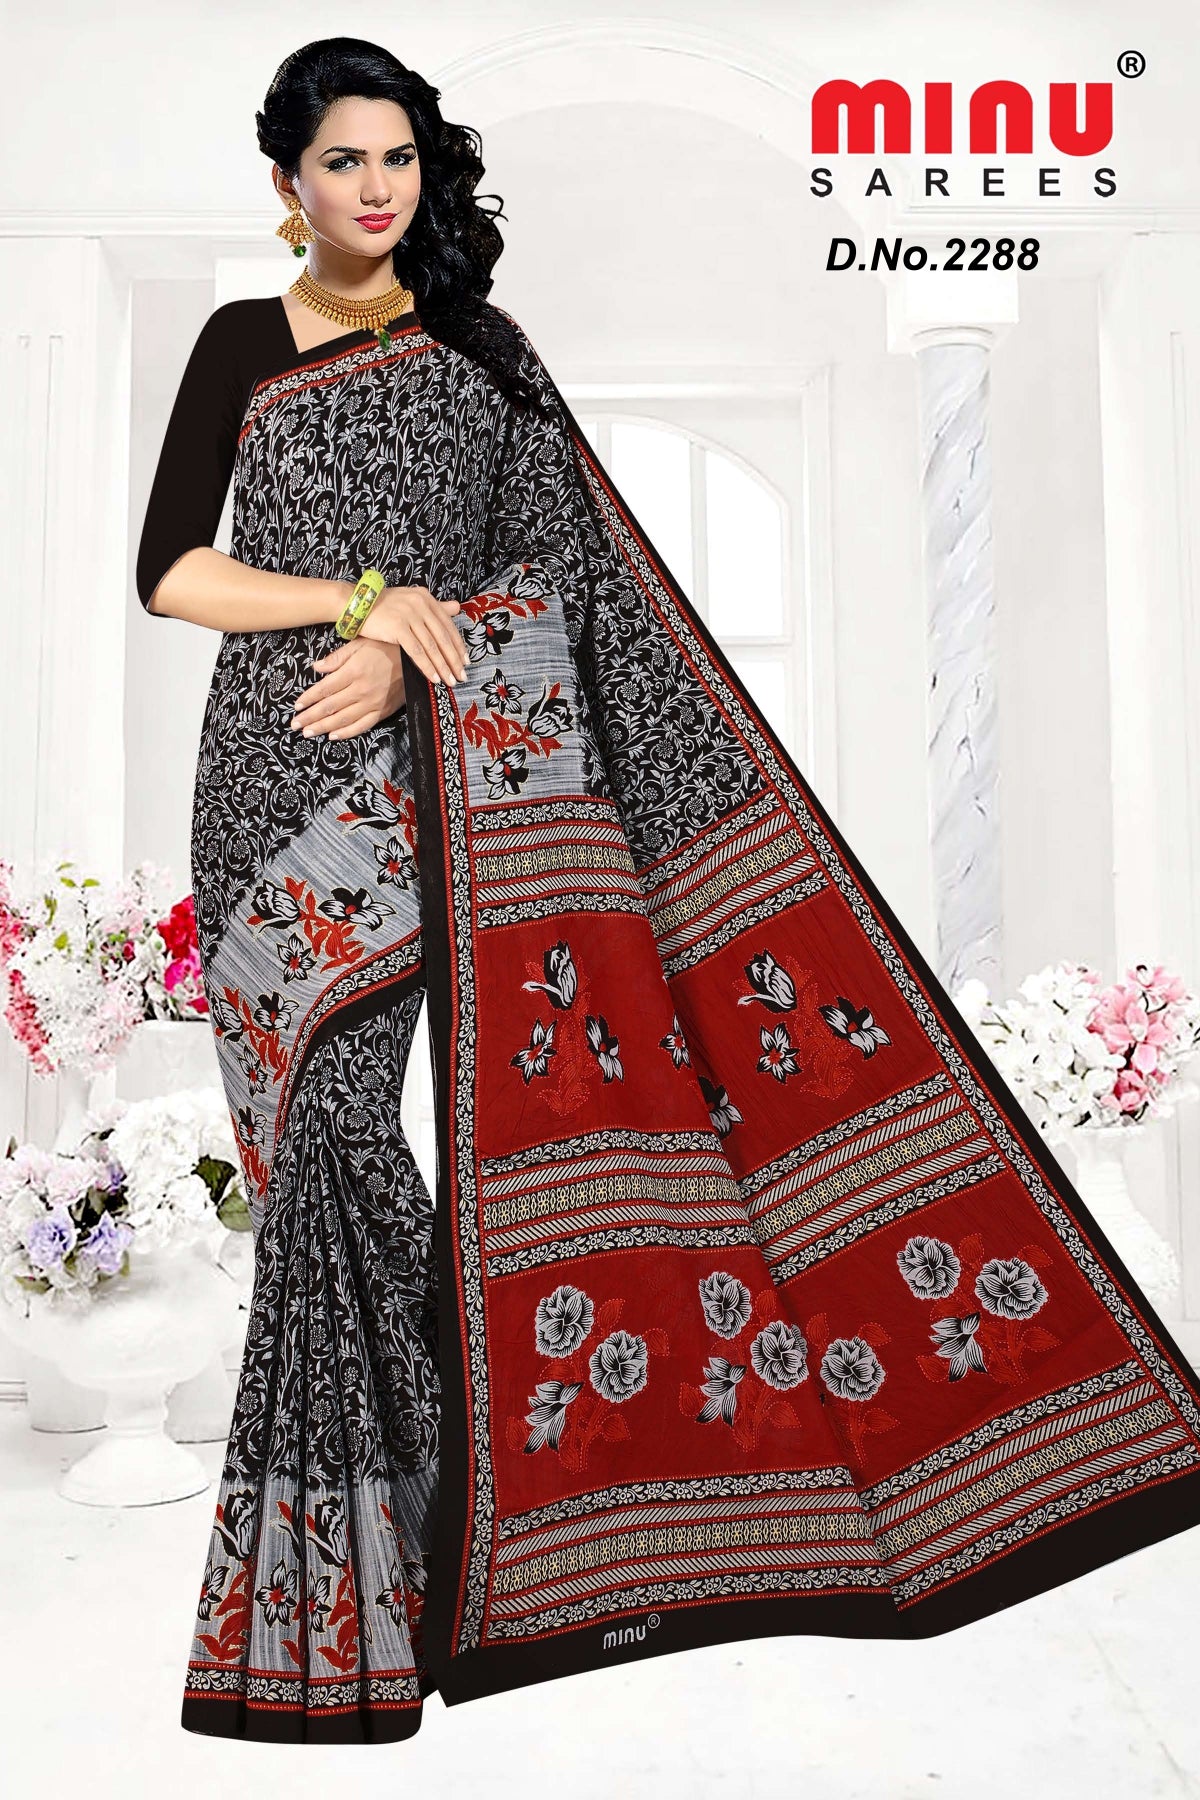 Woman wearing printed saree at best rates